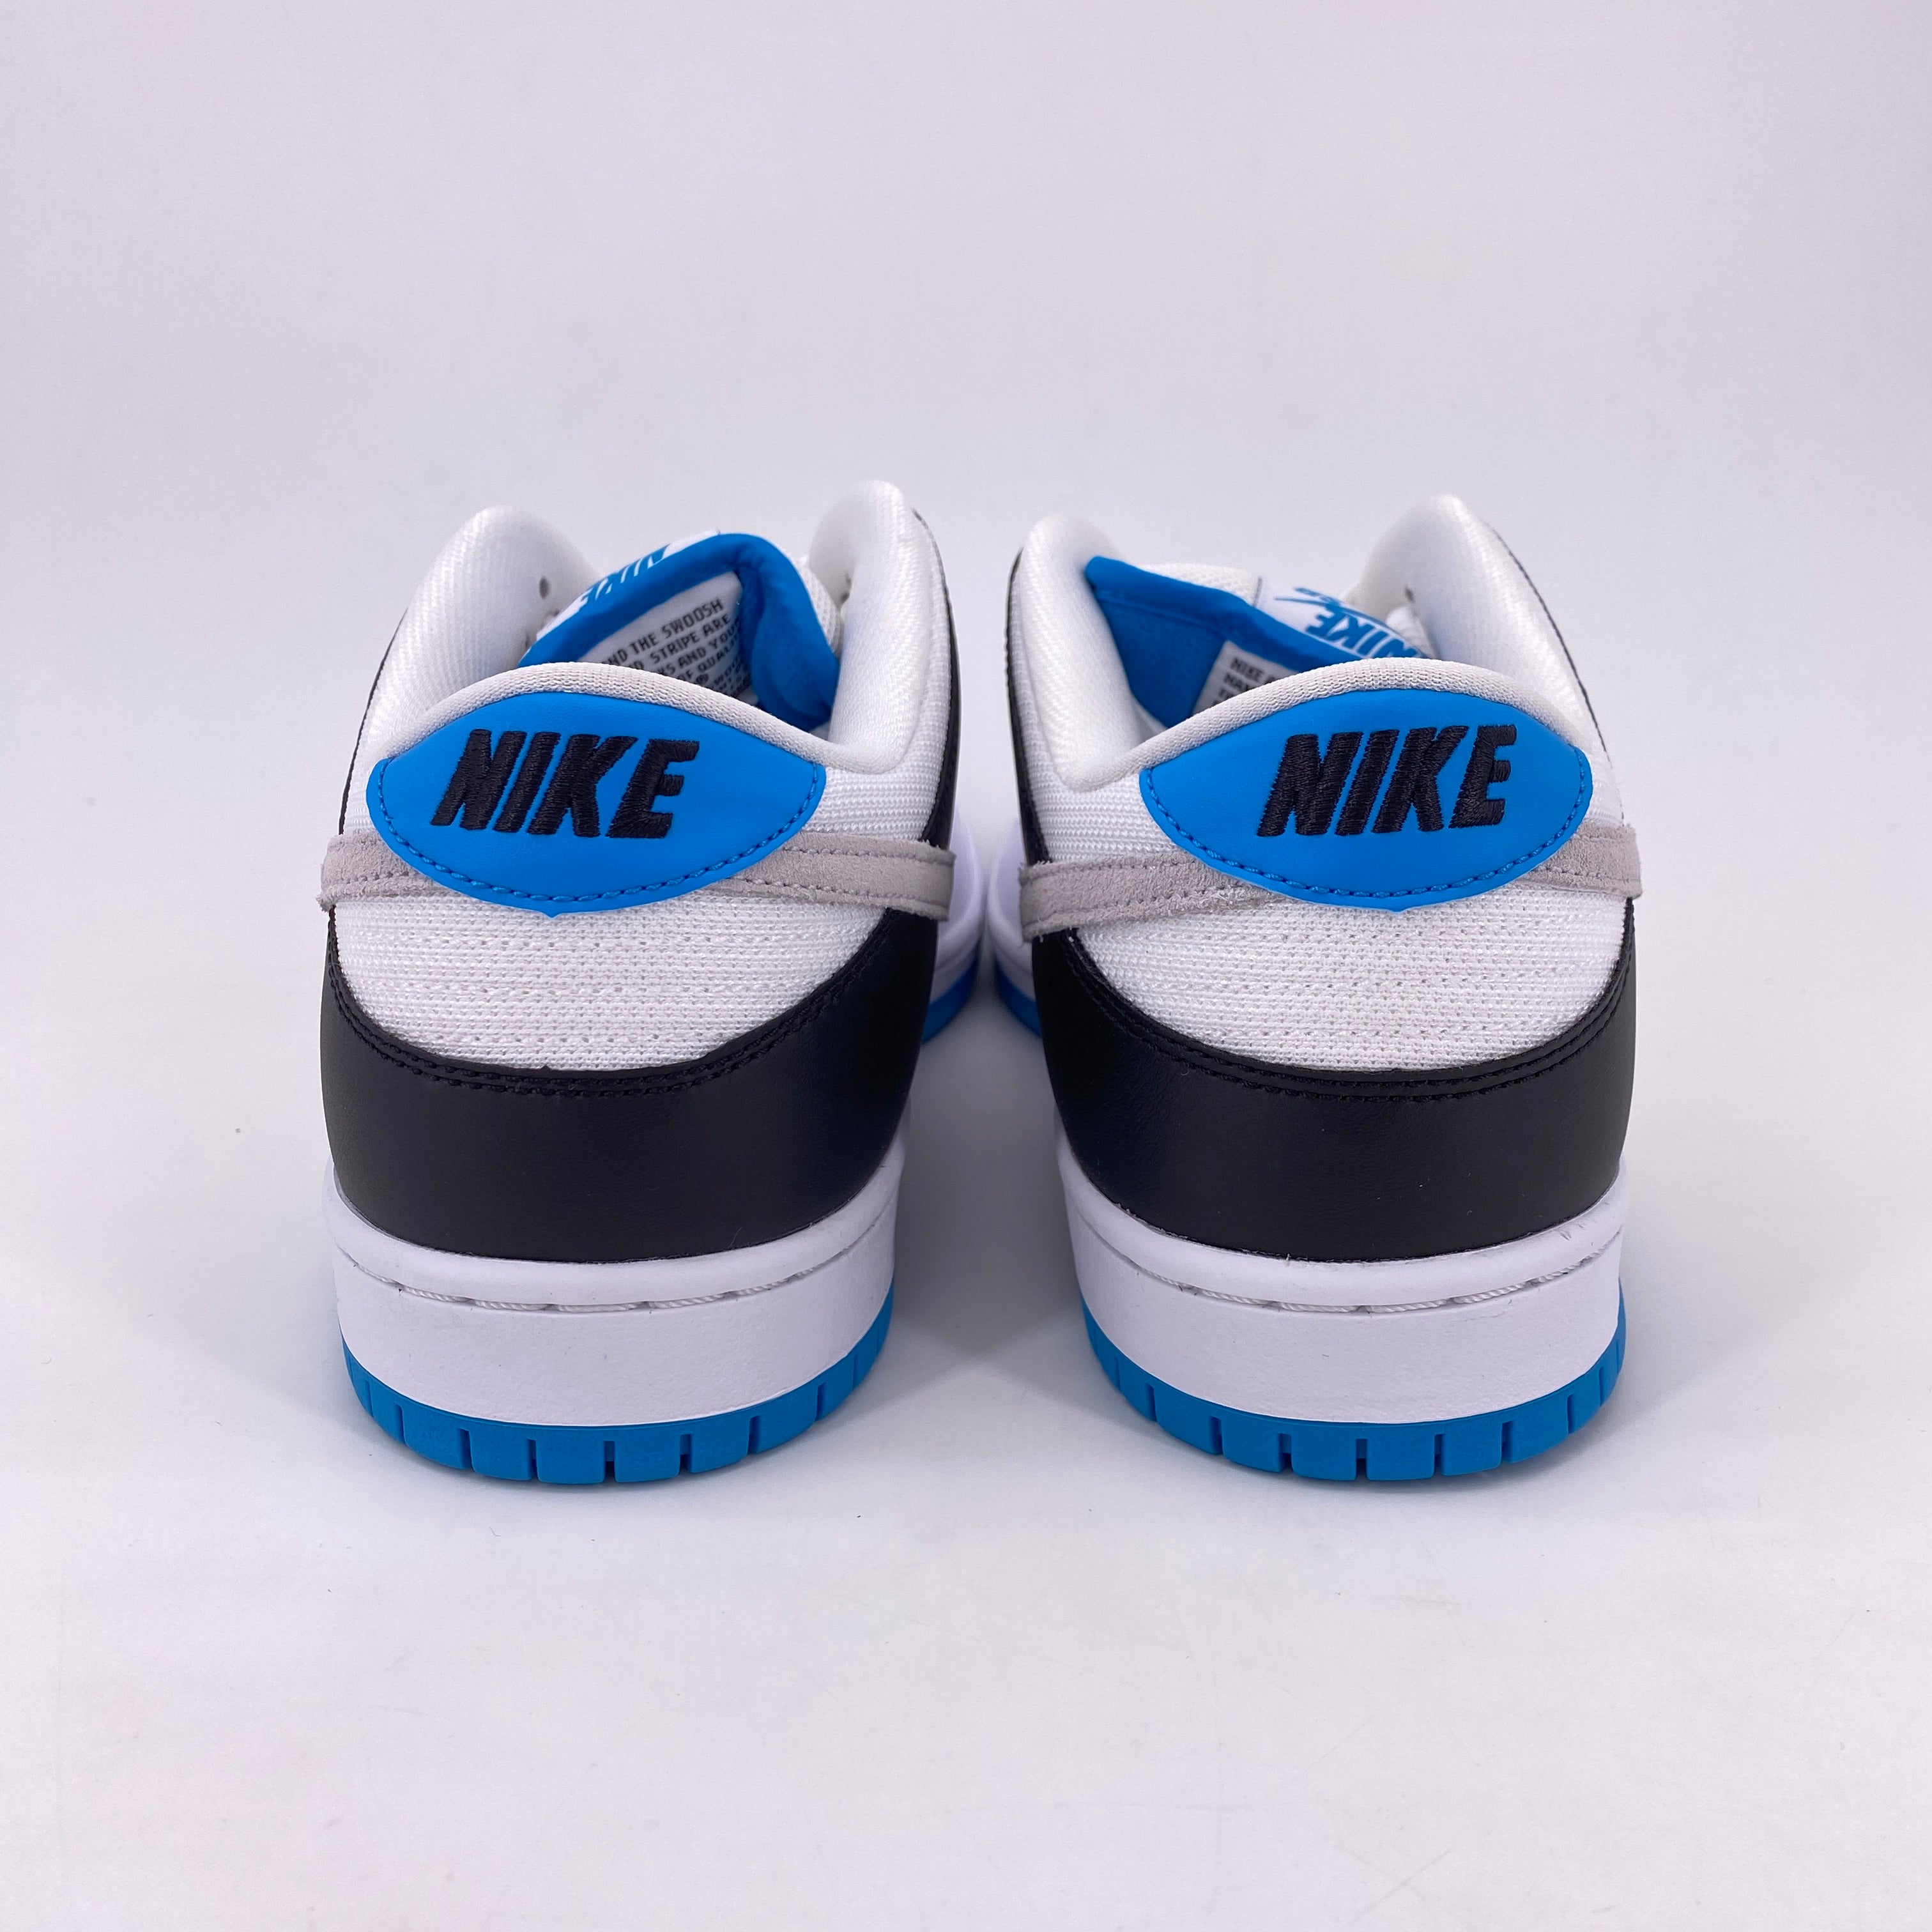 Nike SB Dunk Low Pro "Laser Blue" 2021 New Size 10.5